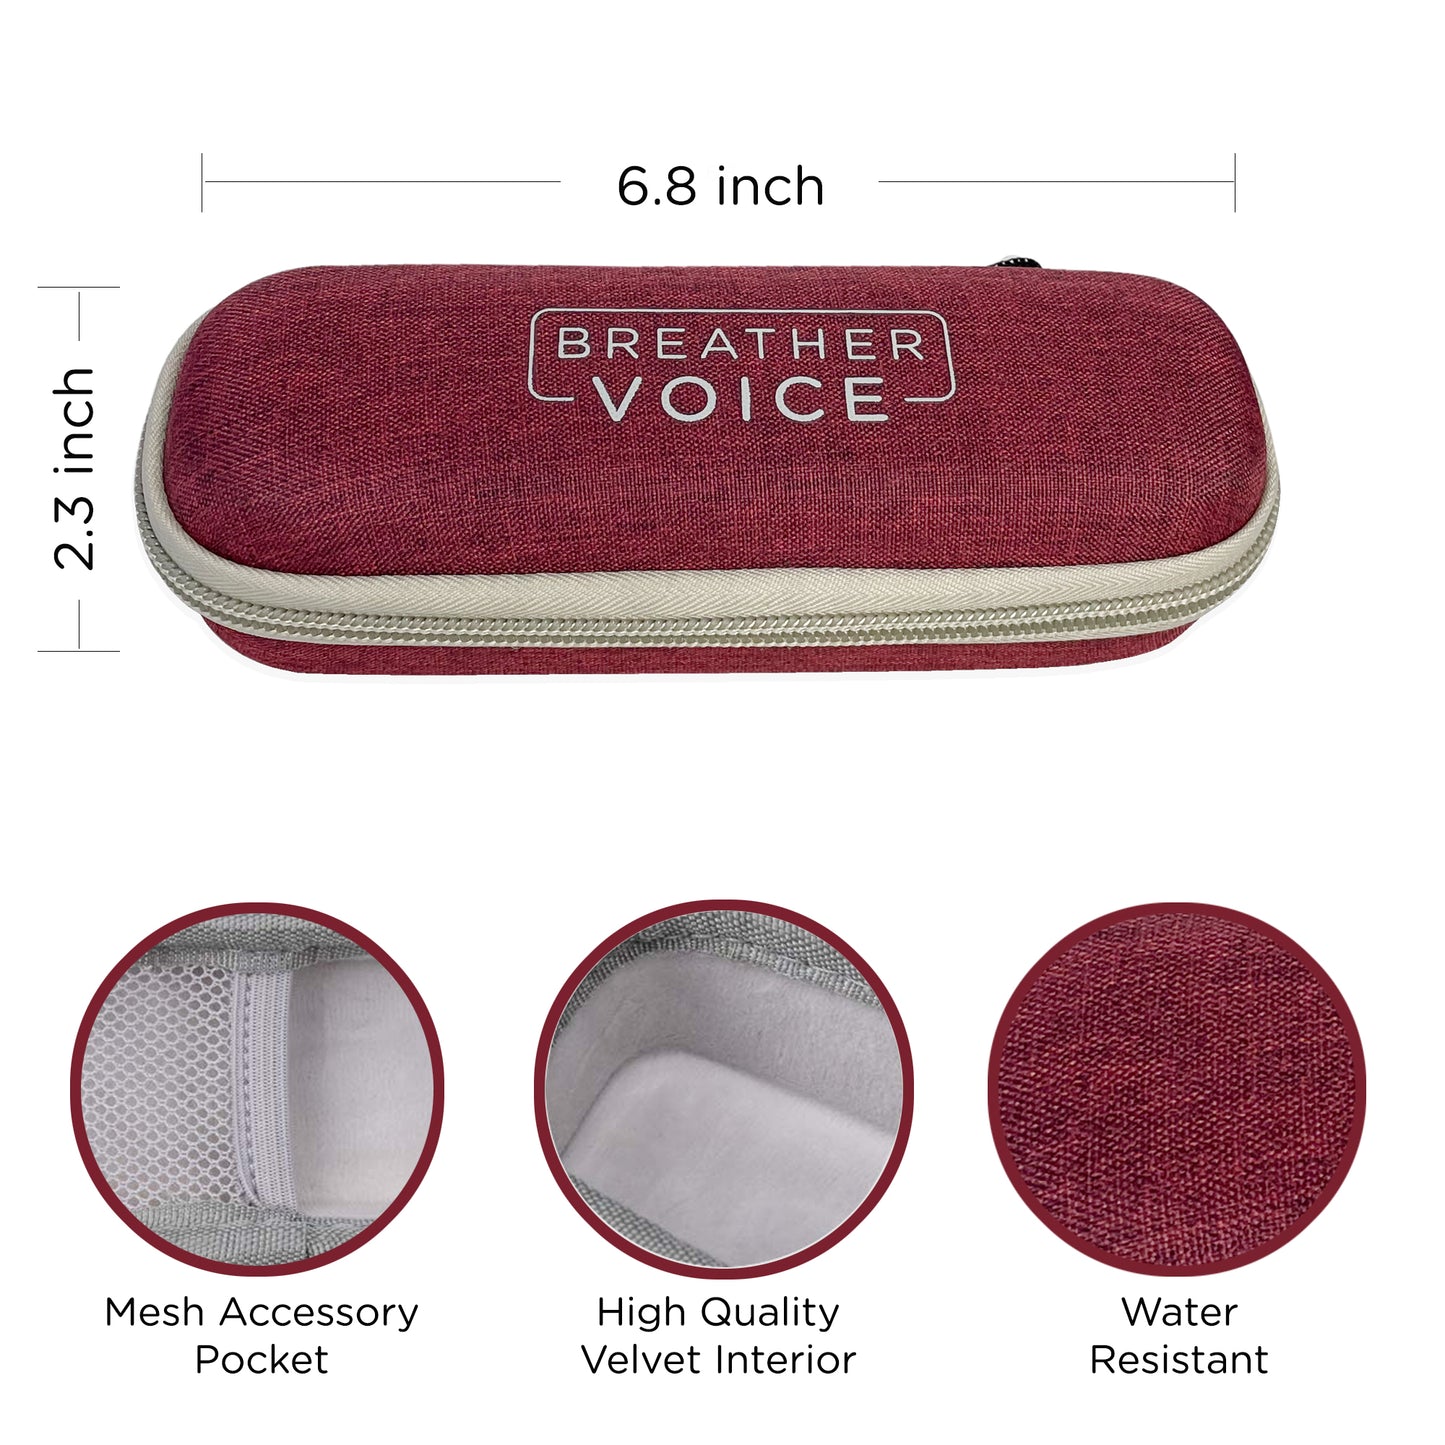 Breather voice case size.